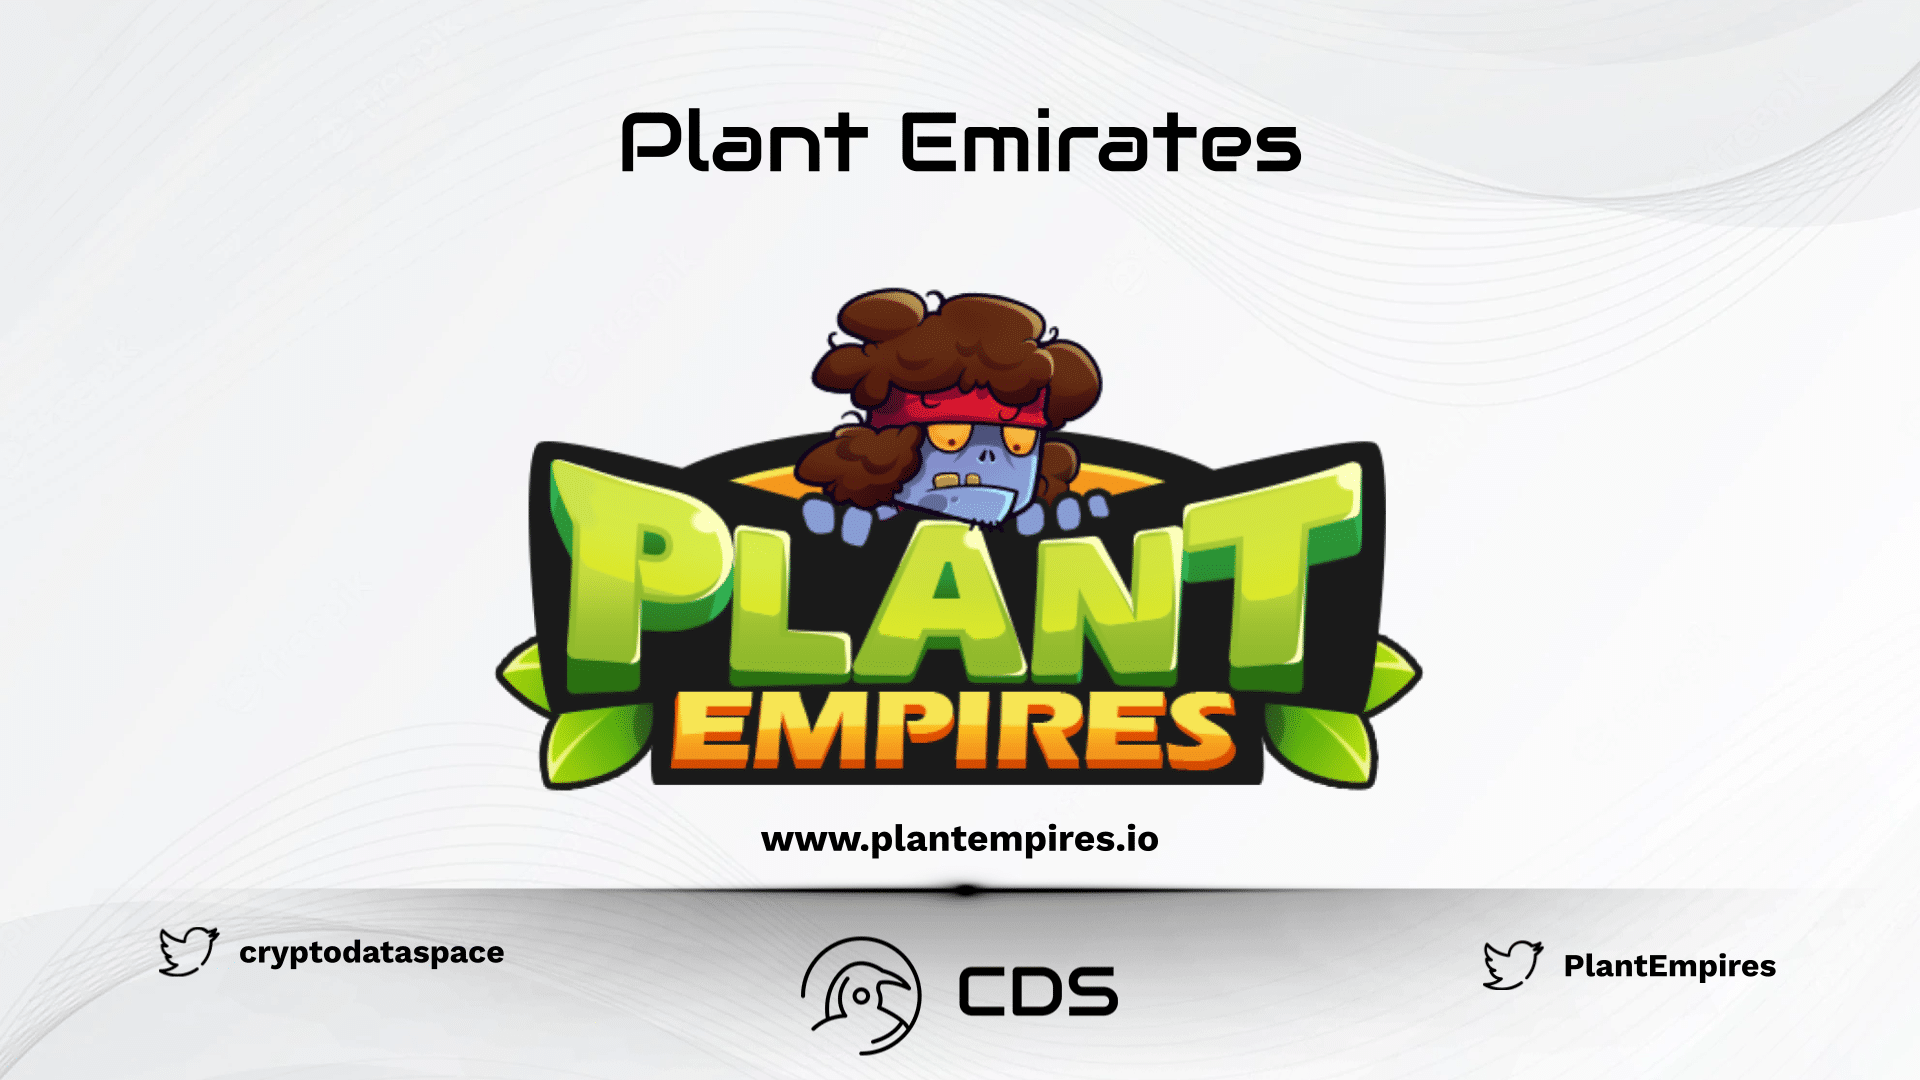 Plant Emirates